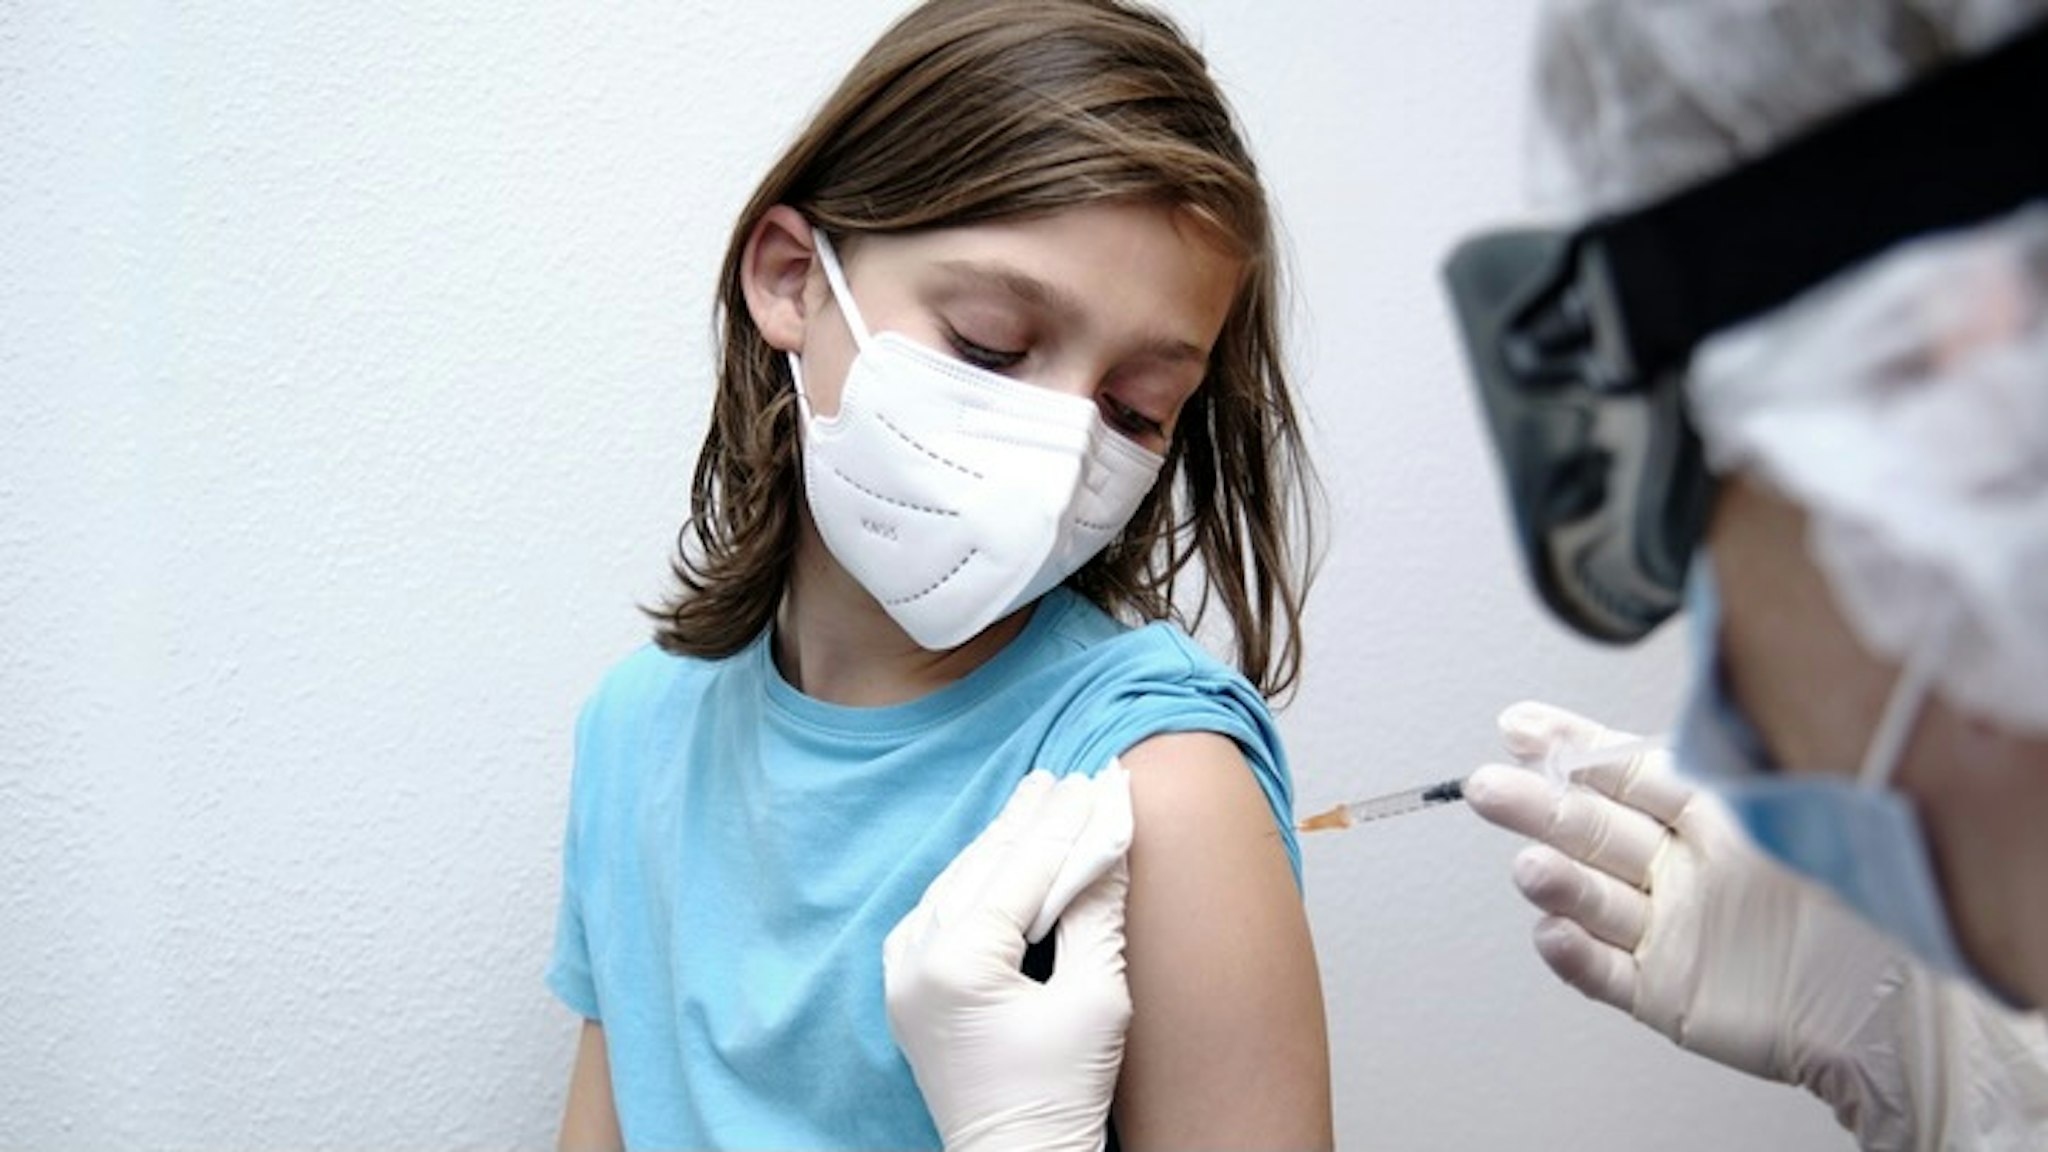 Female doctor giving covid-19 vaccine to a boy - stock photo Roberto Jimenez Mejias